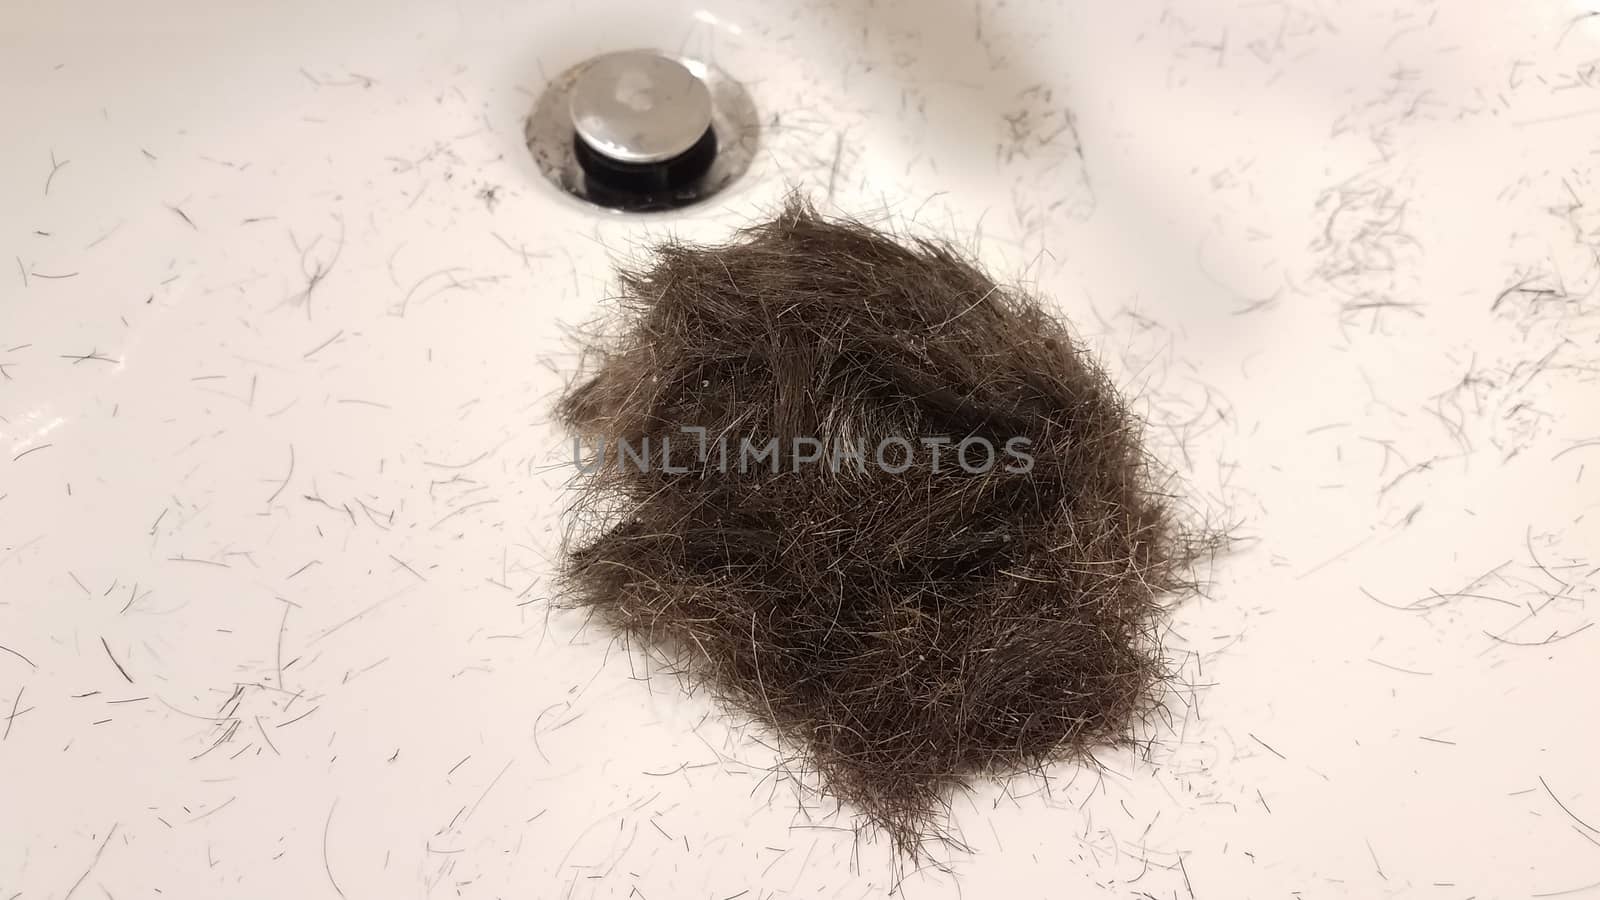 cut brown hair with dandruff in white bathroom sink by stockphotofan1